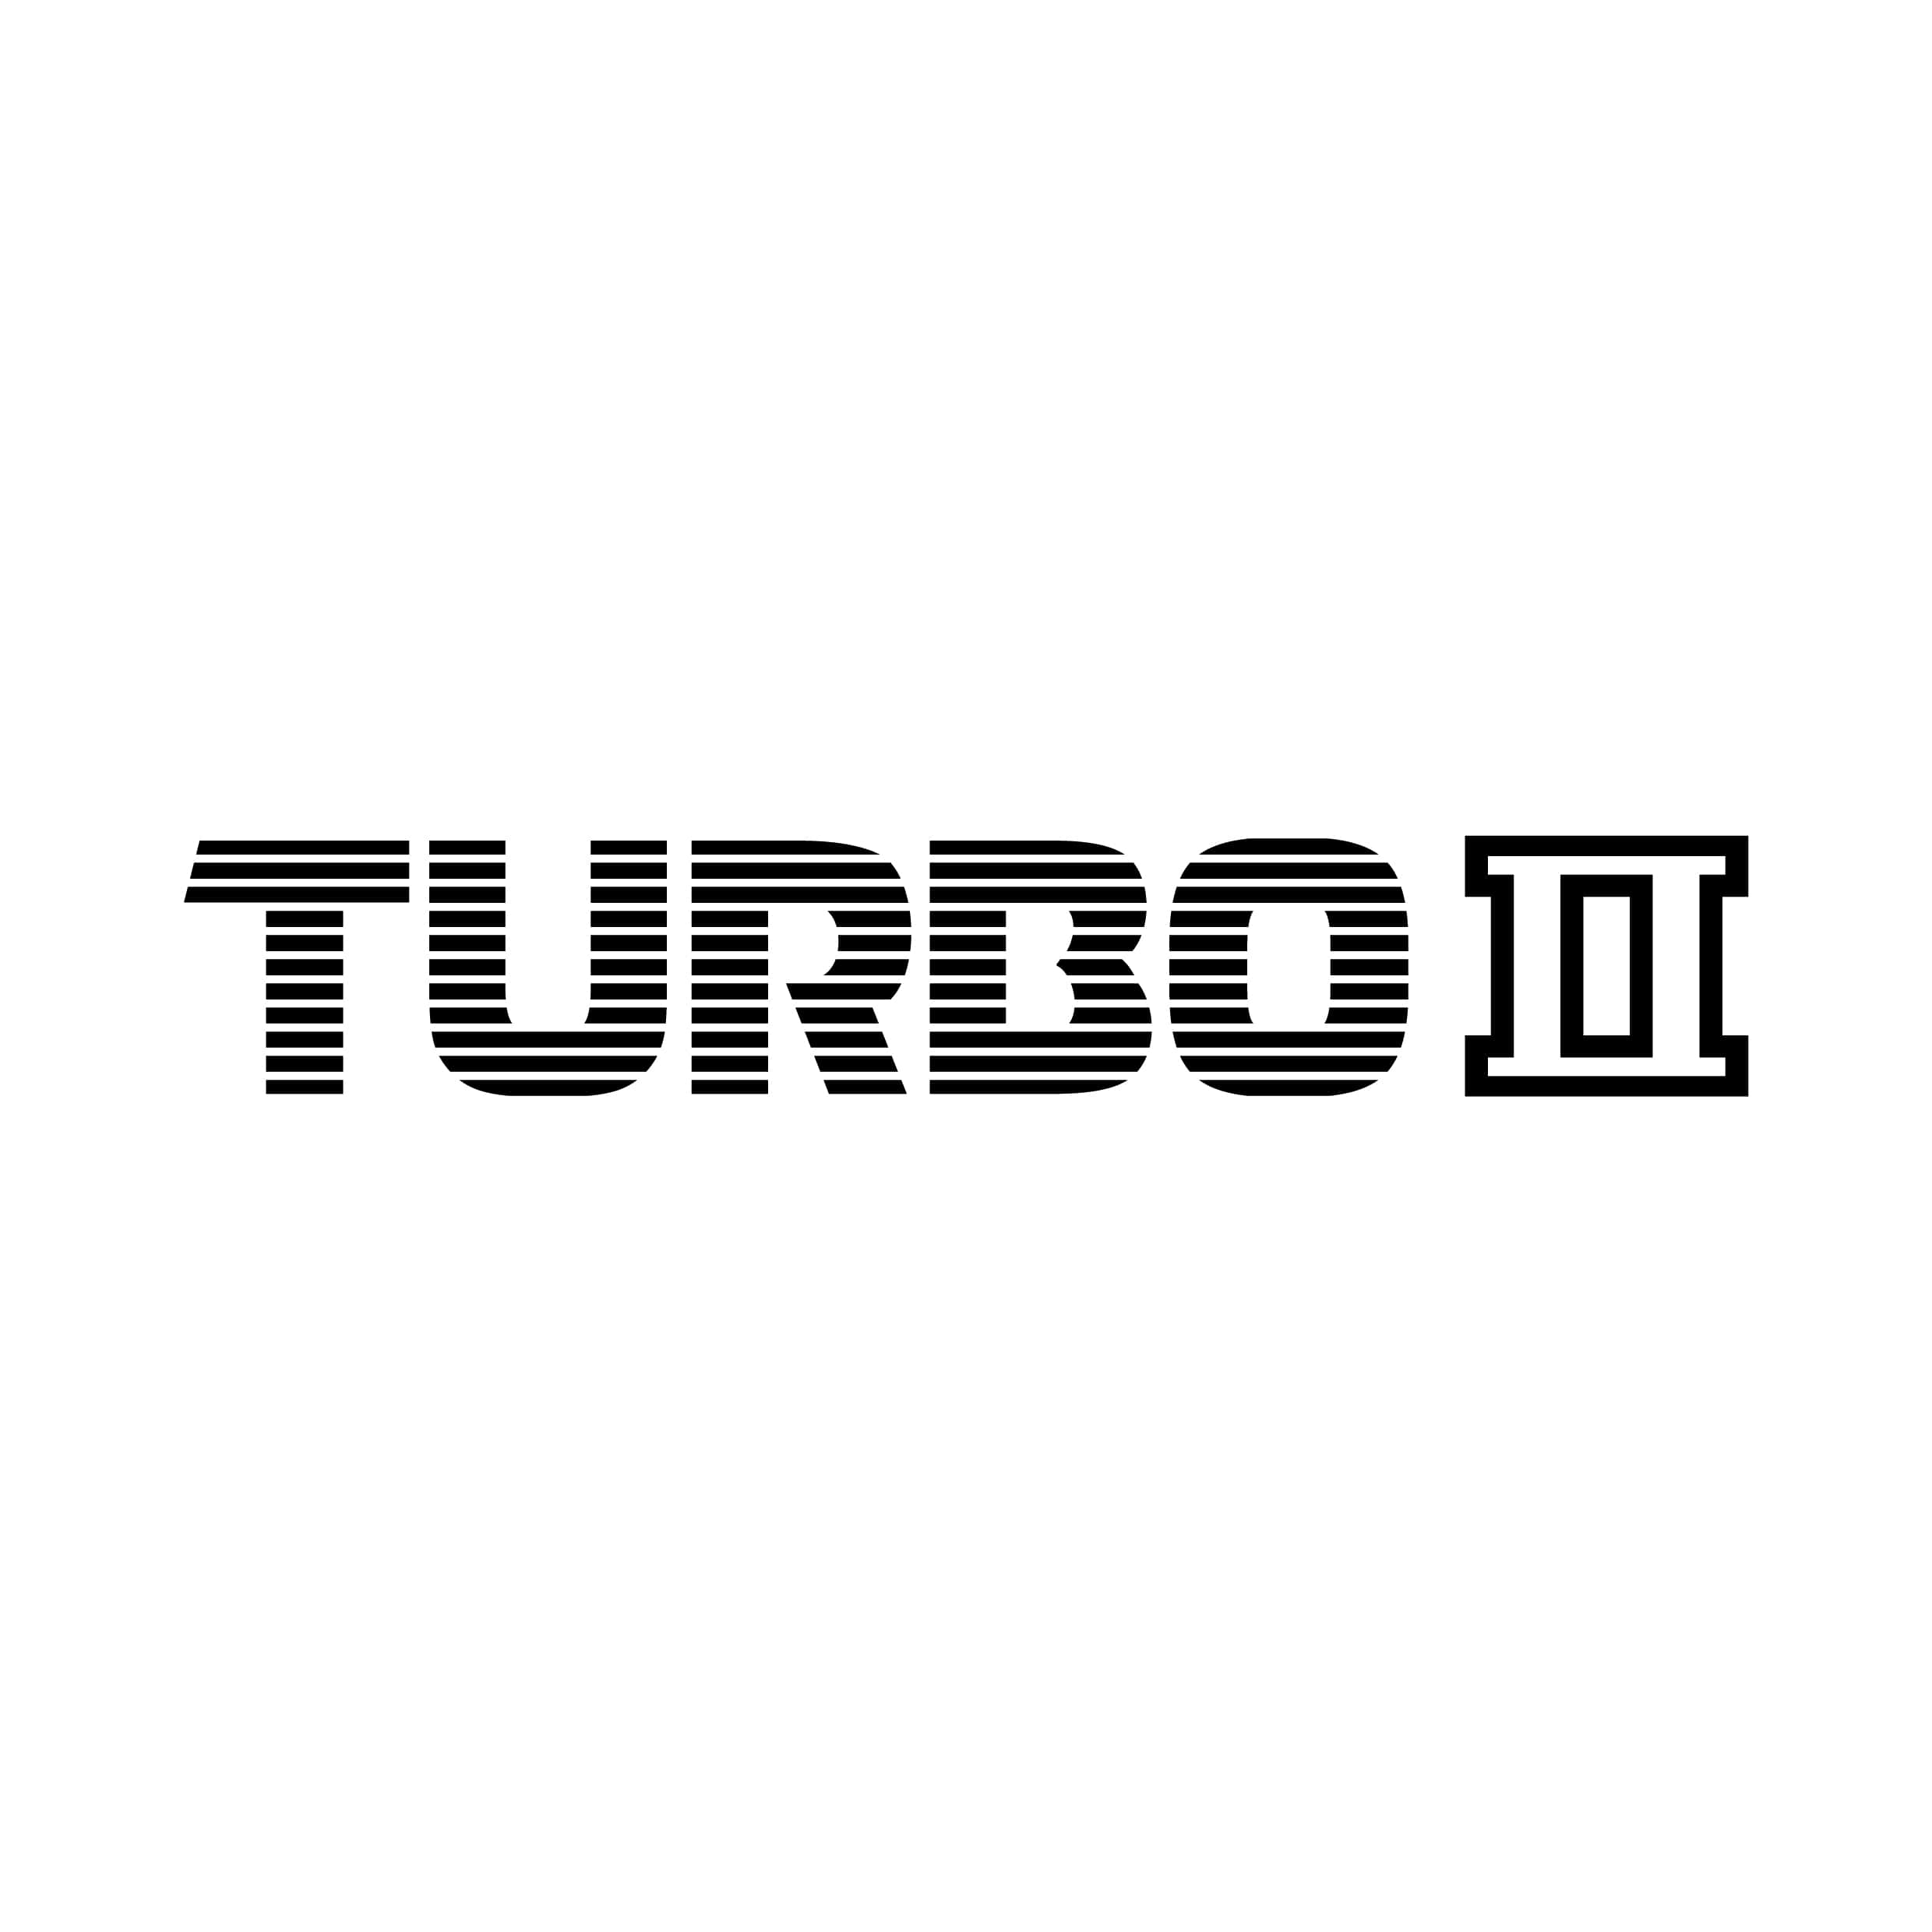 stickers-mazda-turbo-2-ref20-autocollant-voiture-sticker-auto-autocollants-decals-sponsors-racing-tuning-sport-logo-min